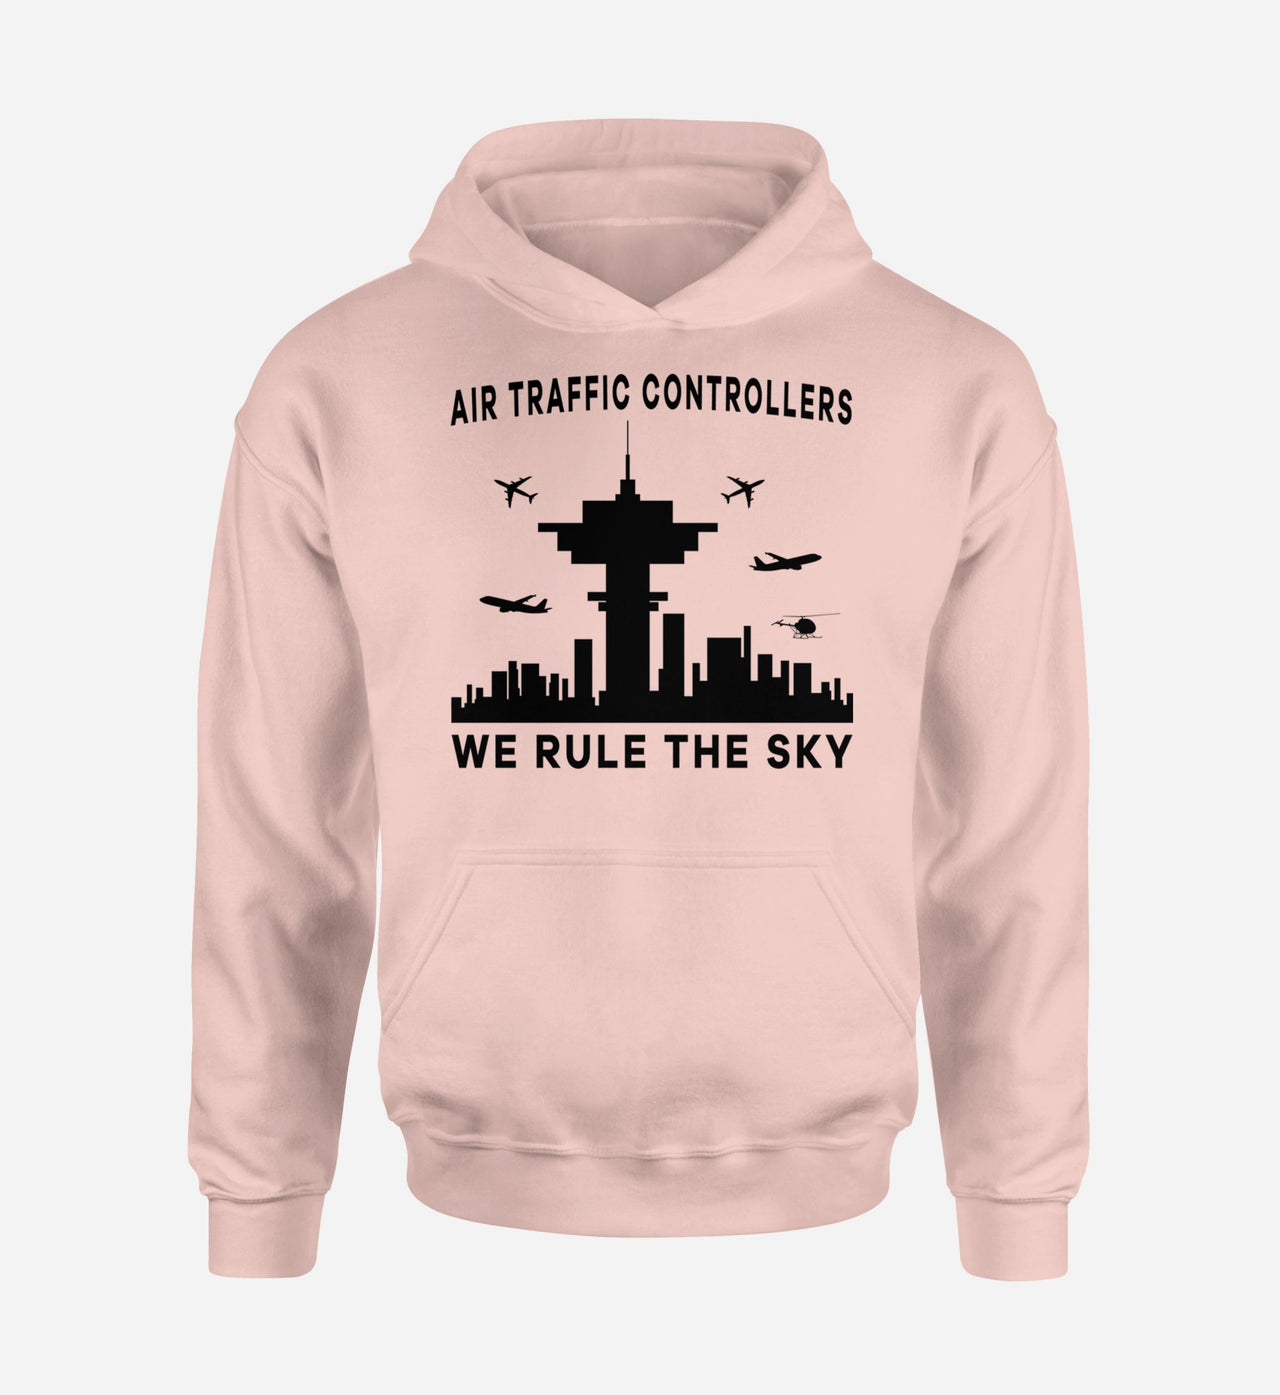 Air Traffic Controllers - We Rule The Sky Designed Hoodies